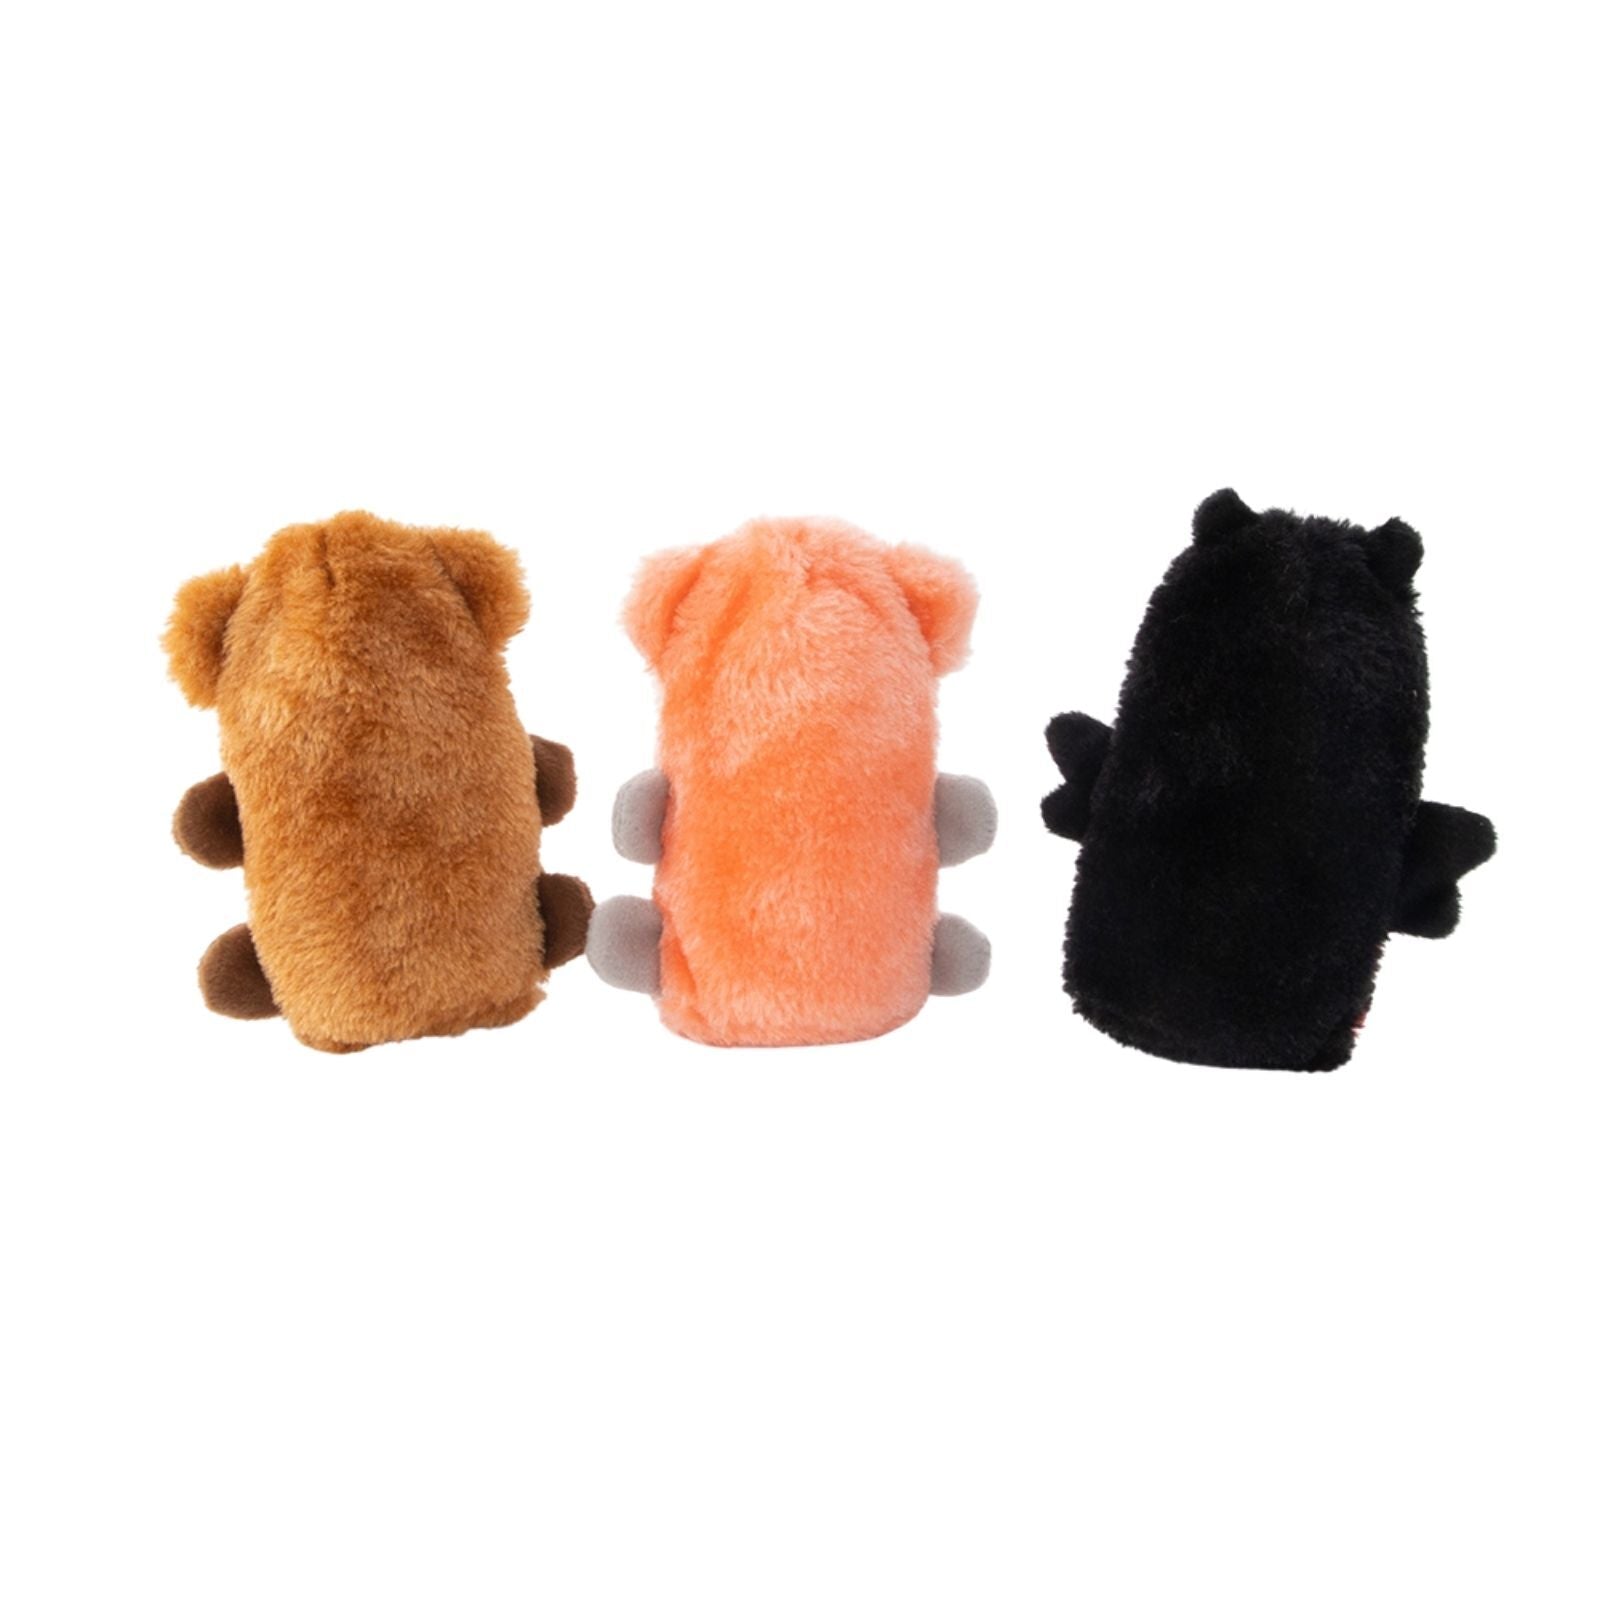 ZippyPaws Valentine's Squeakie Buddies 3 Pack  |  Squeaky Plush Toys